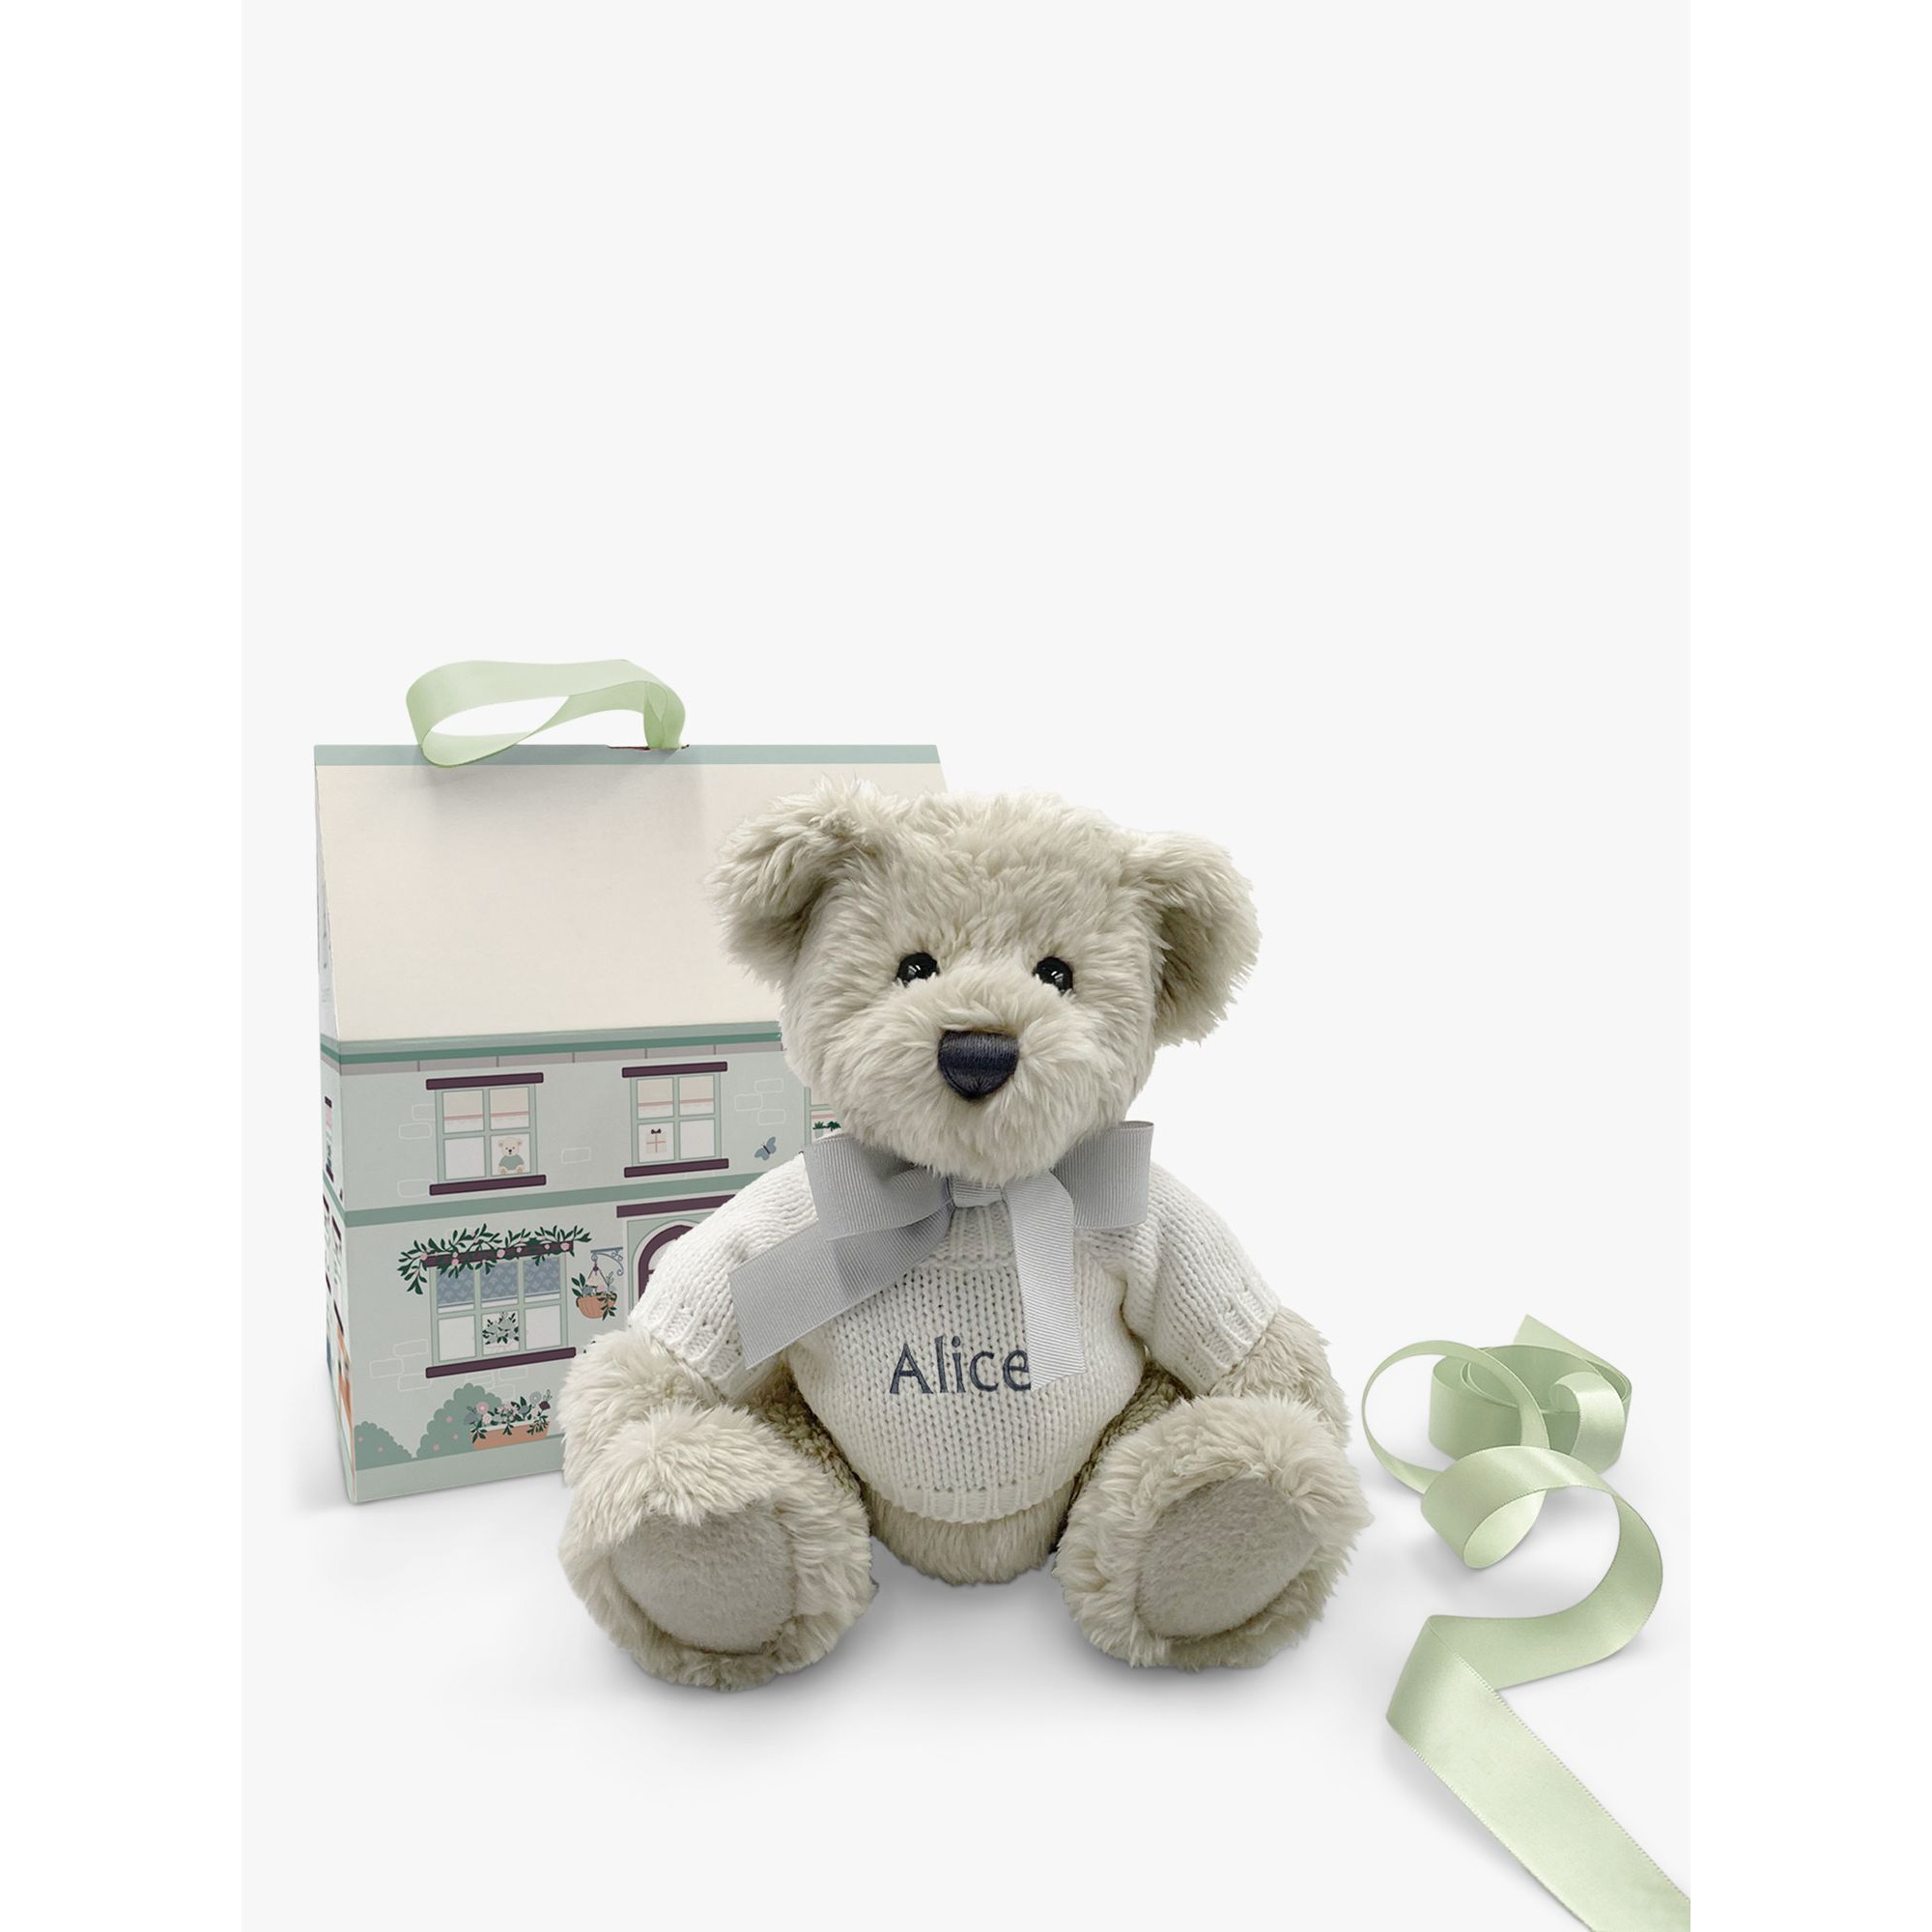 Babyblooms Personalised Berkeley Bear Soft Toy with Bear House Box, White - image 1